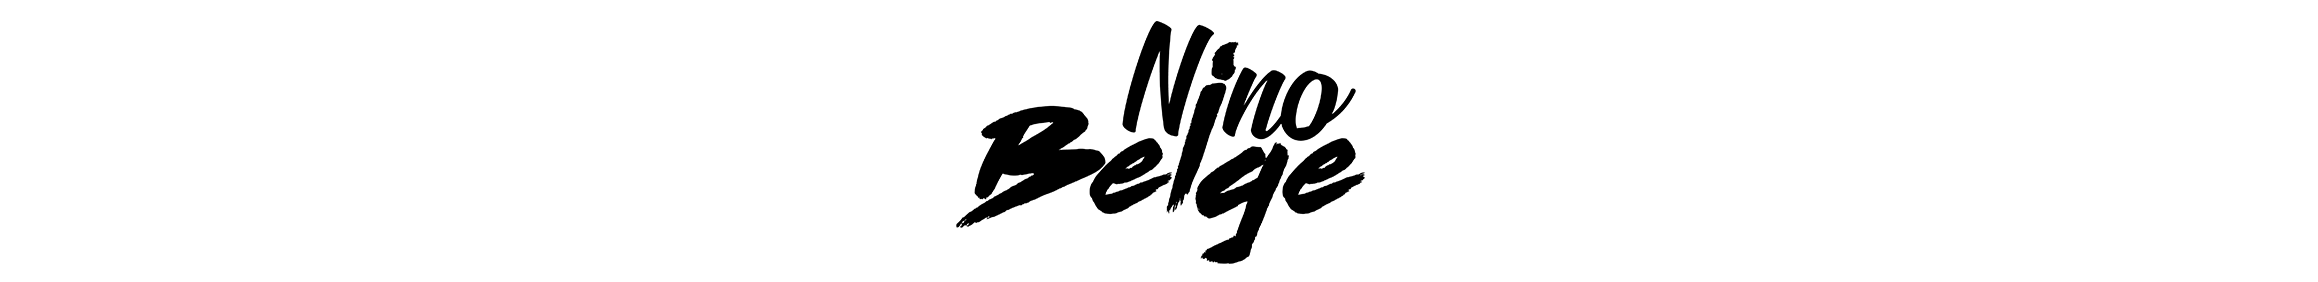 Nino Beige's profile banner